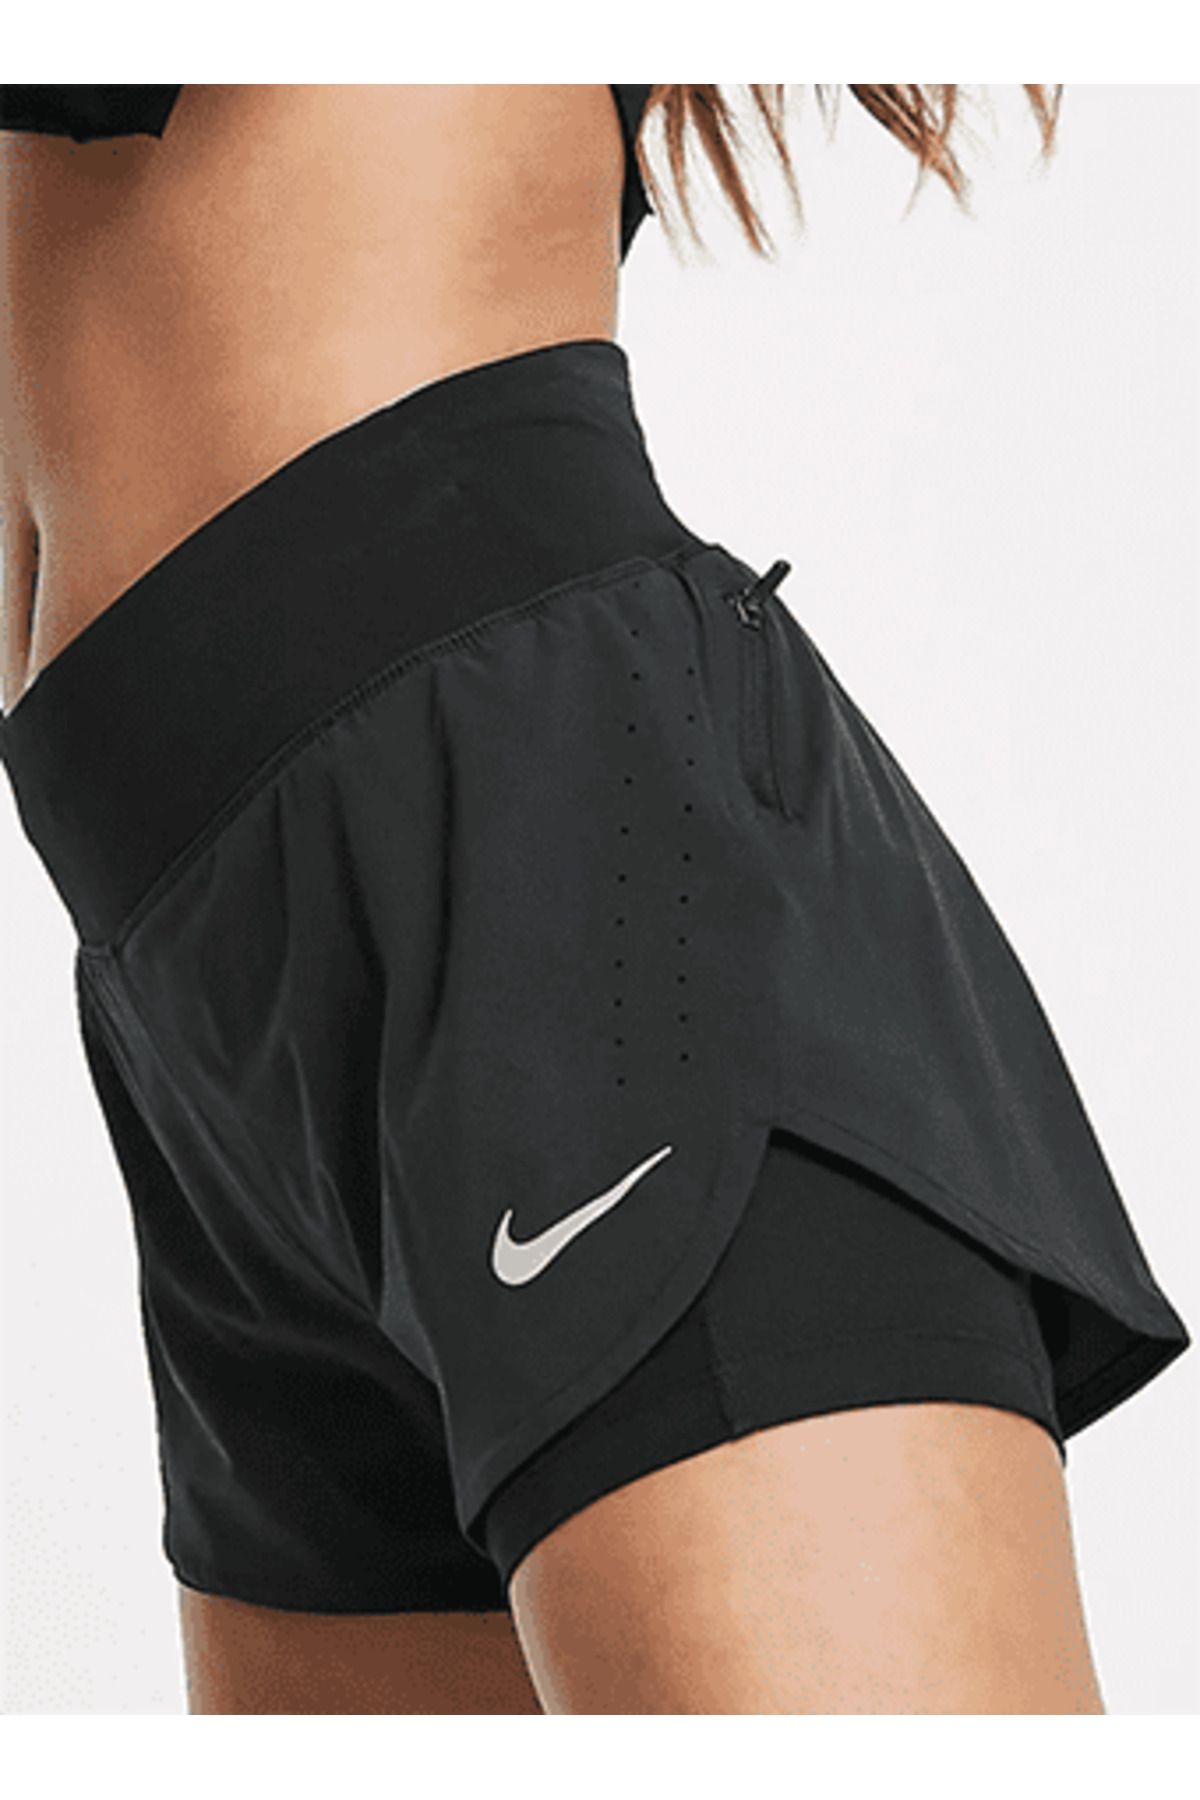 Nike Sports Shorts - Beige - Normal Waist - Trendyol